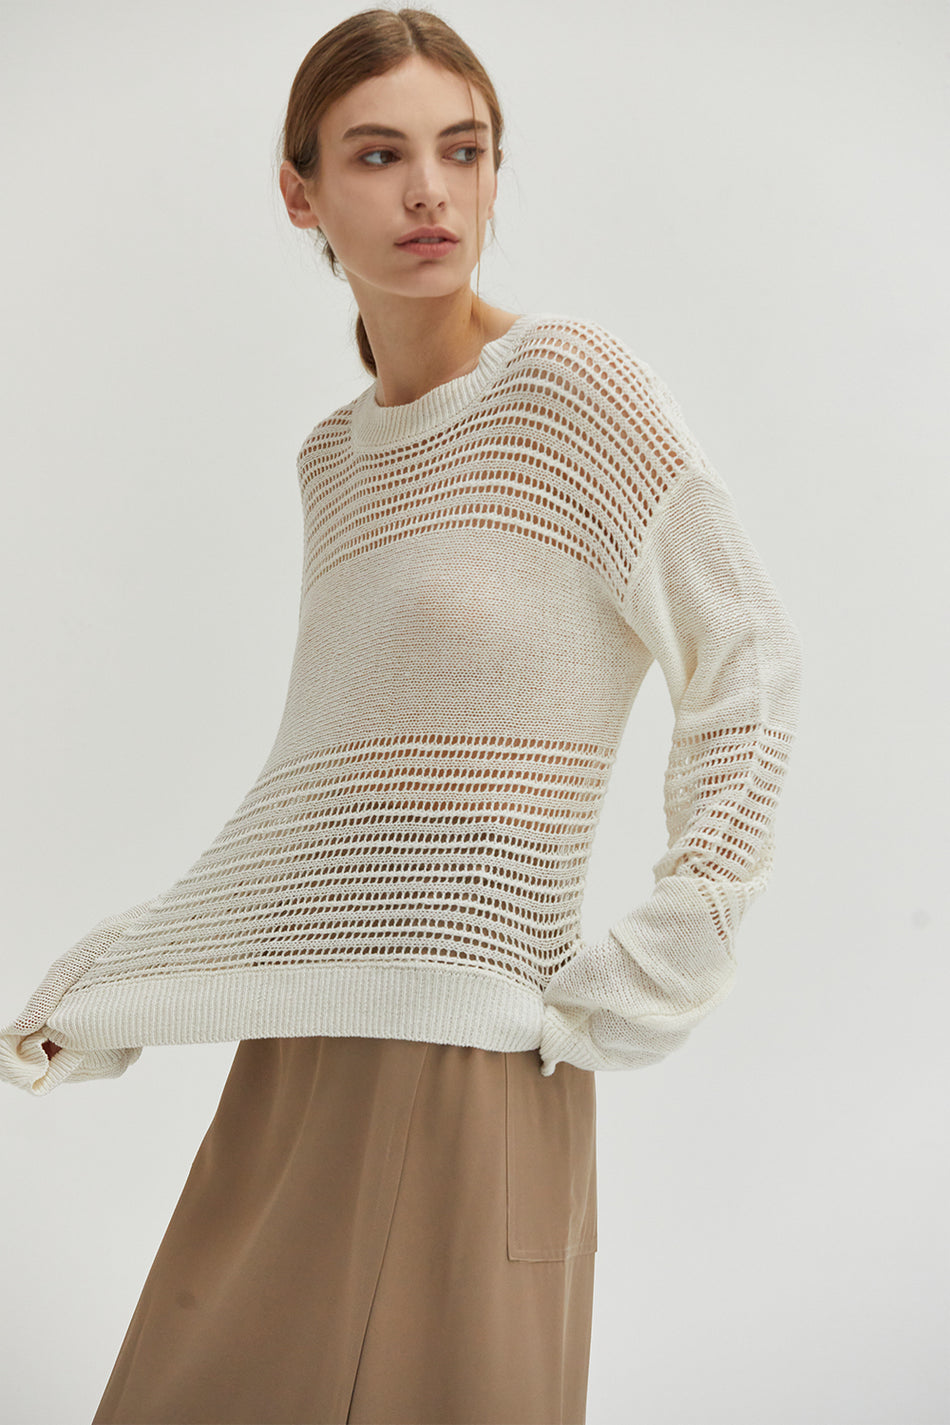 a studio model in a white knit sweater